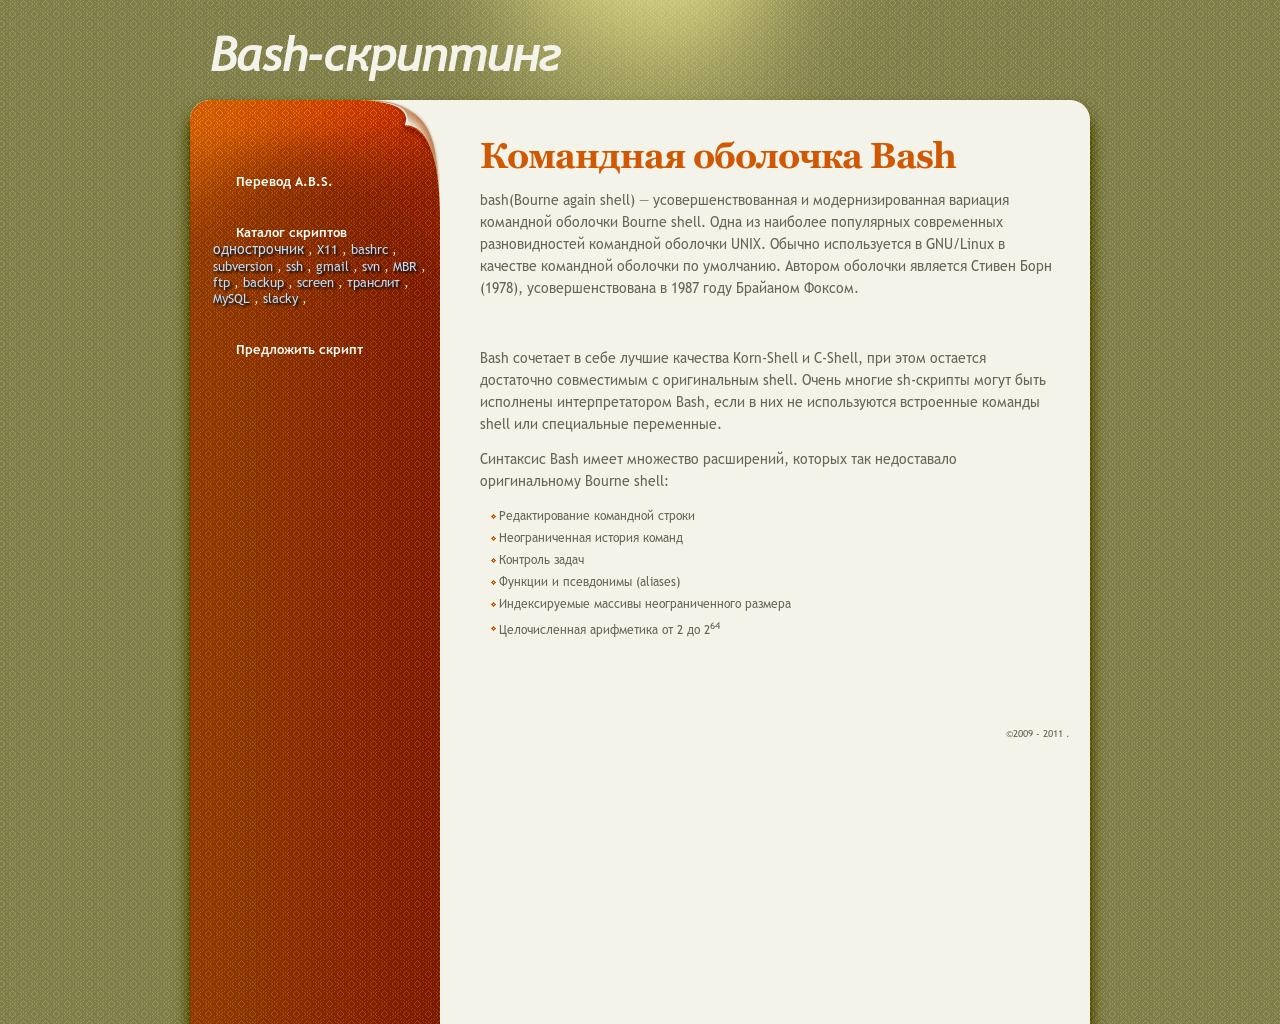 Изображение сайта bash-scripting.ru в разрешении 1280x1024